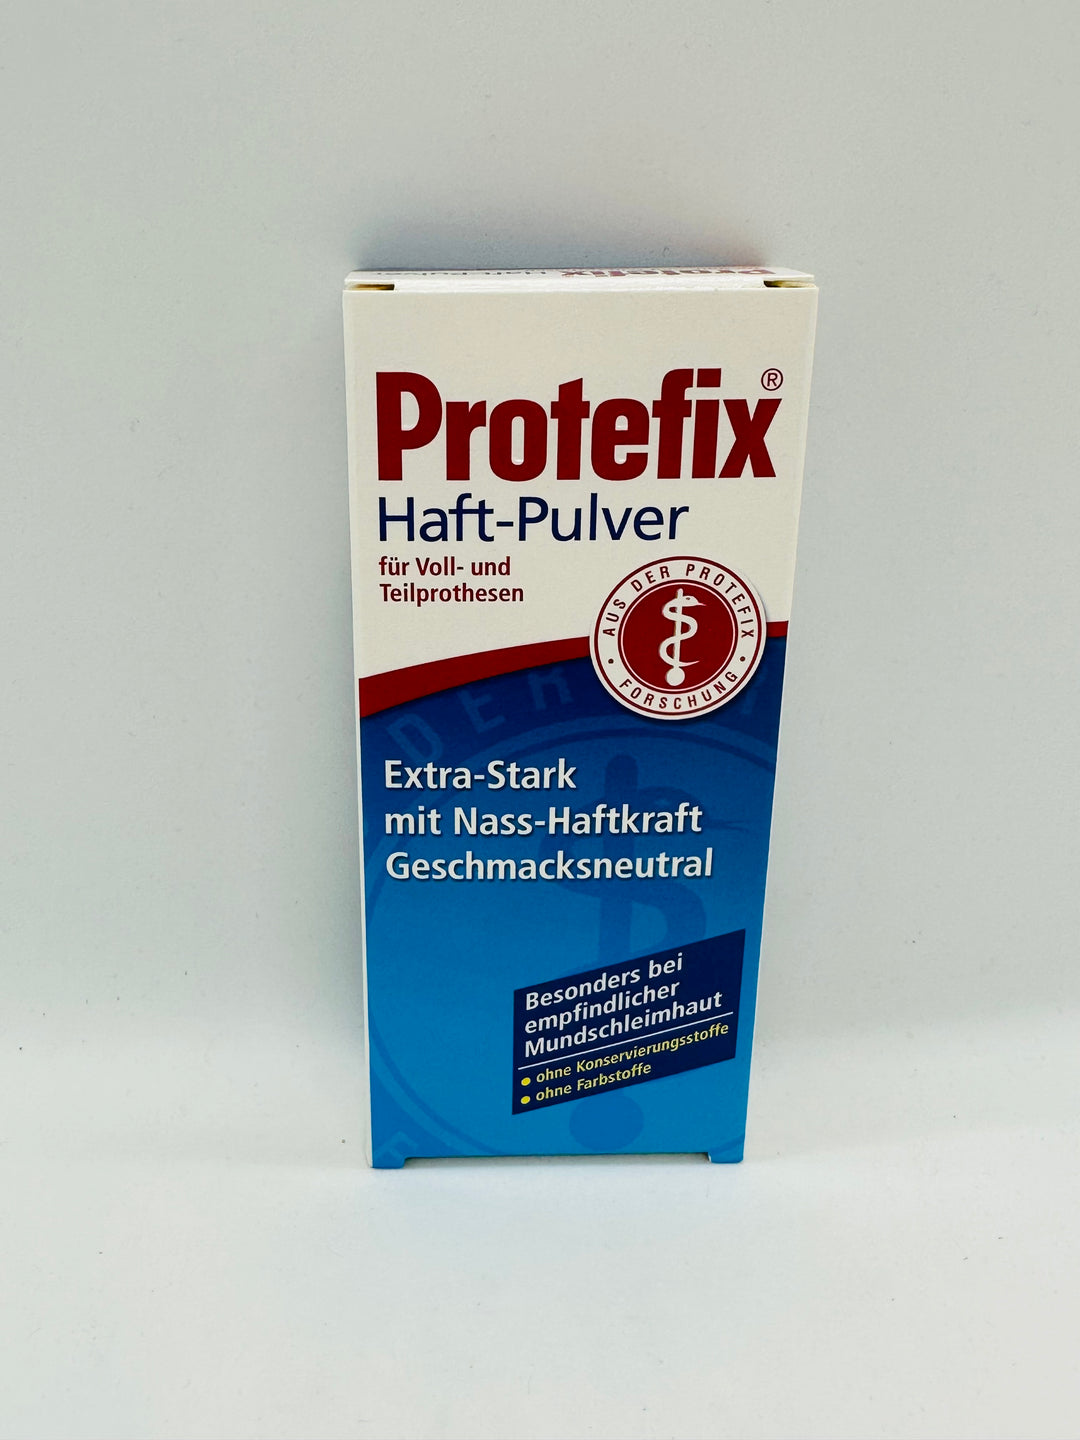 Protefix Haft-Pulver